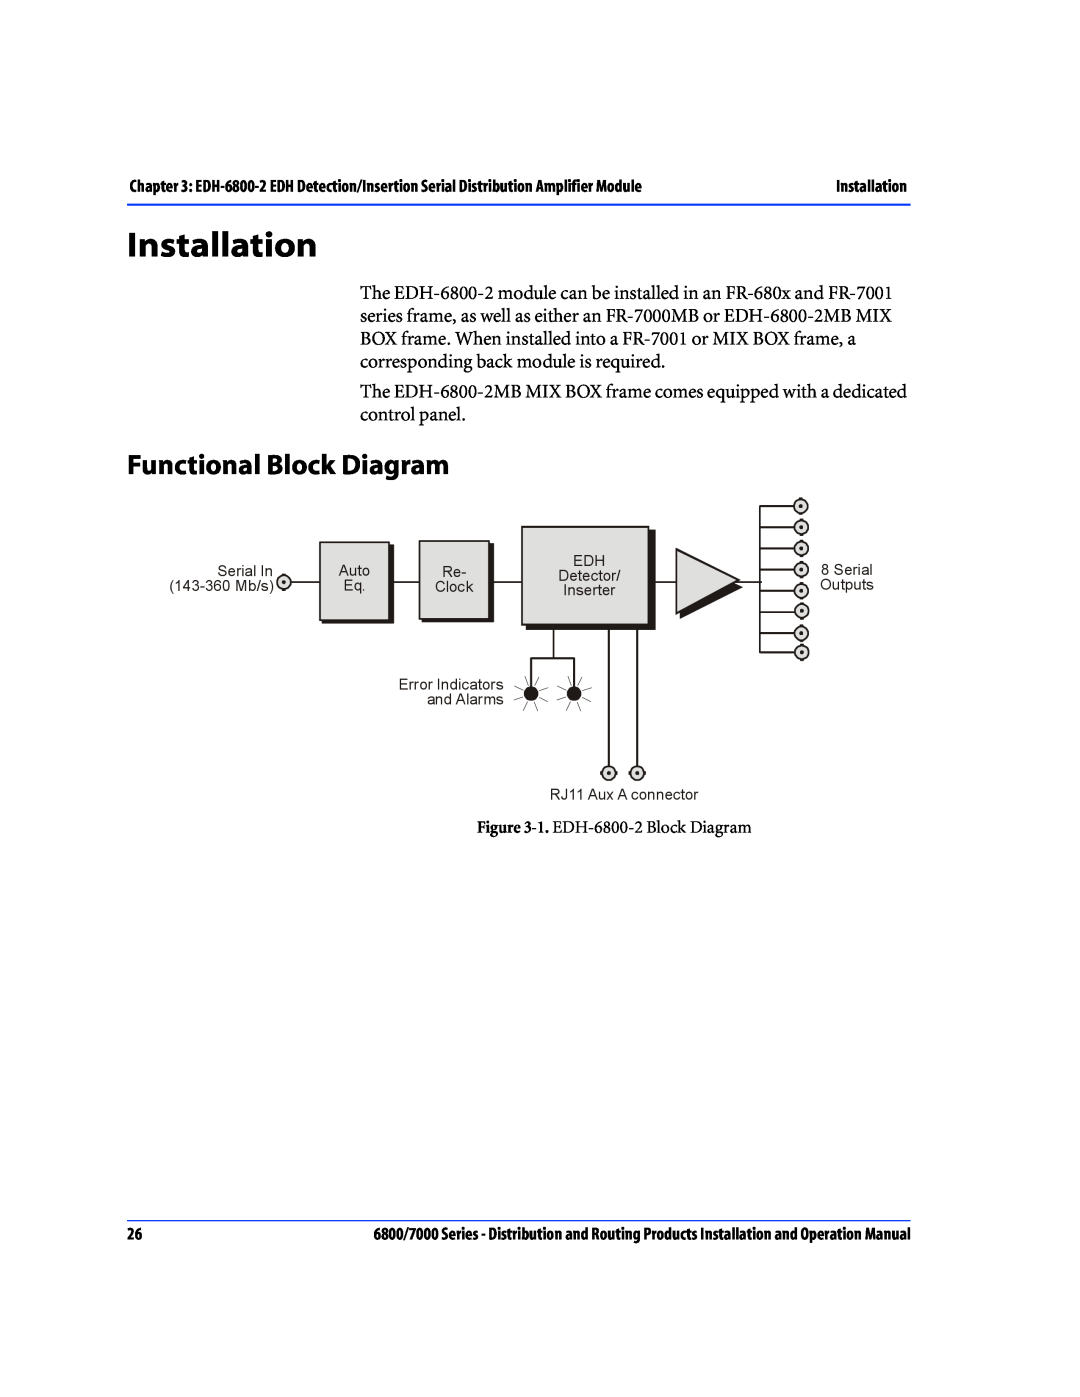 Nokia 7000 Series, 6800 Series operation manual Installation, Functional Block Diagram, 1. EDH-6800-2 Block Diagram 